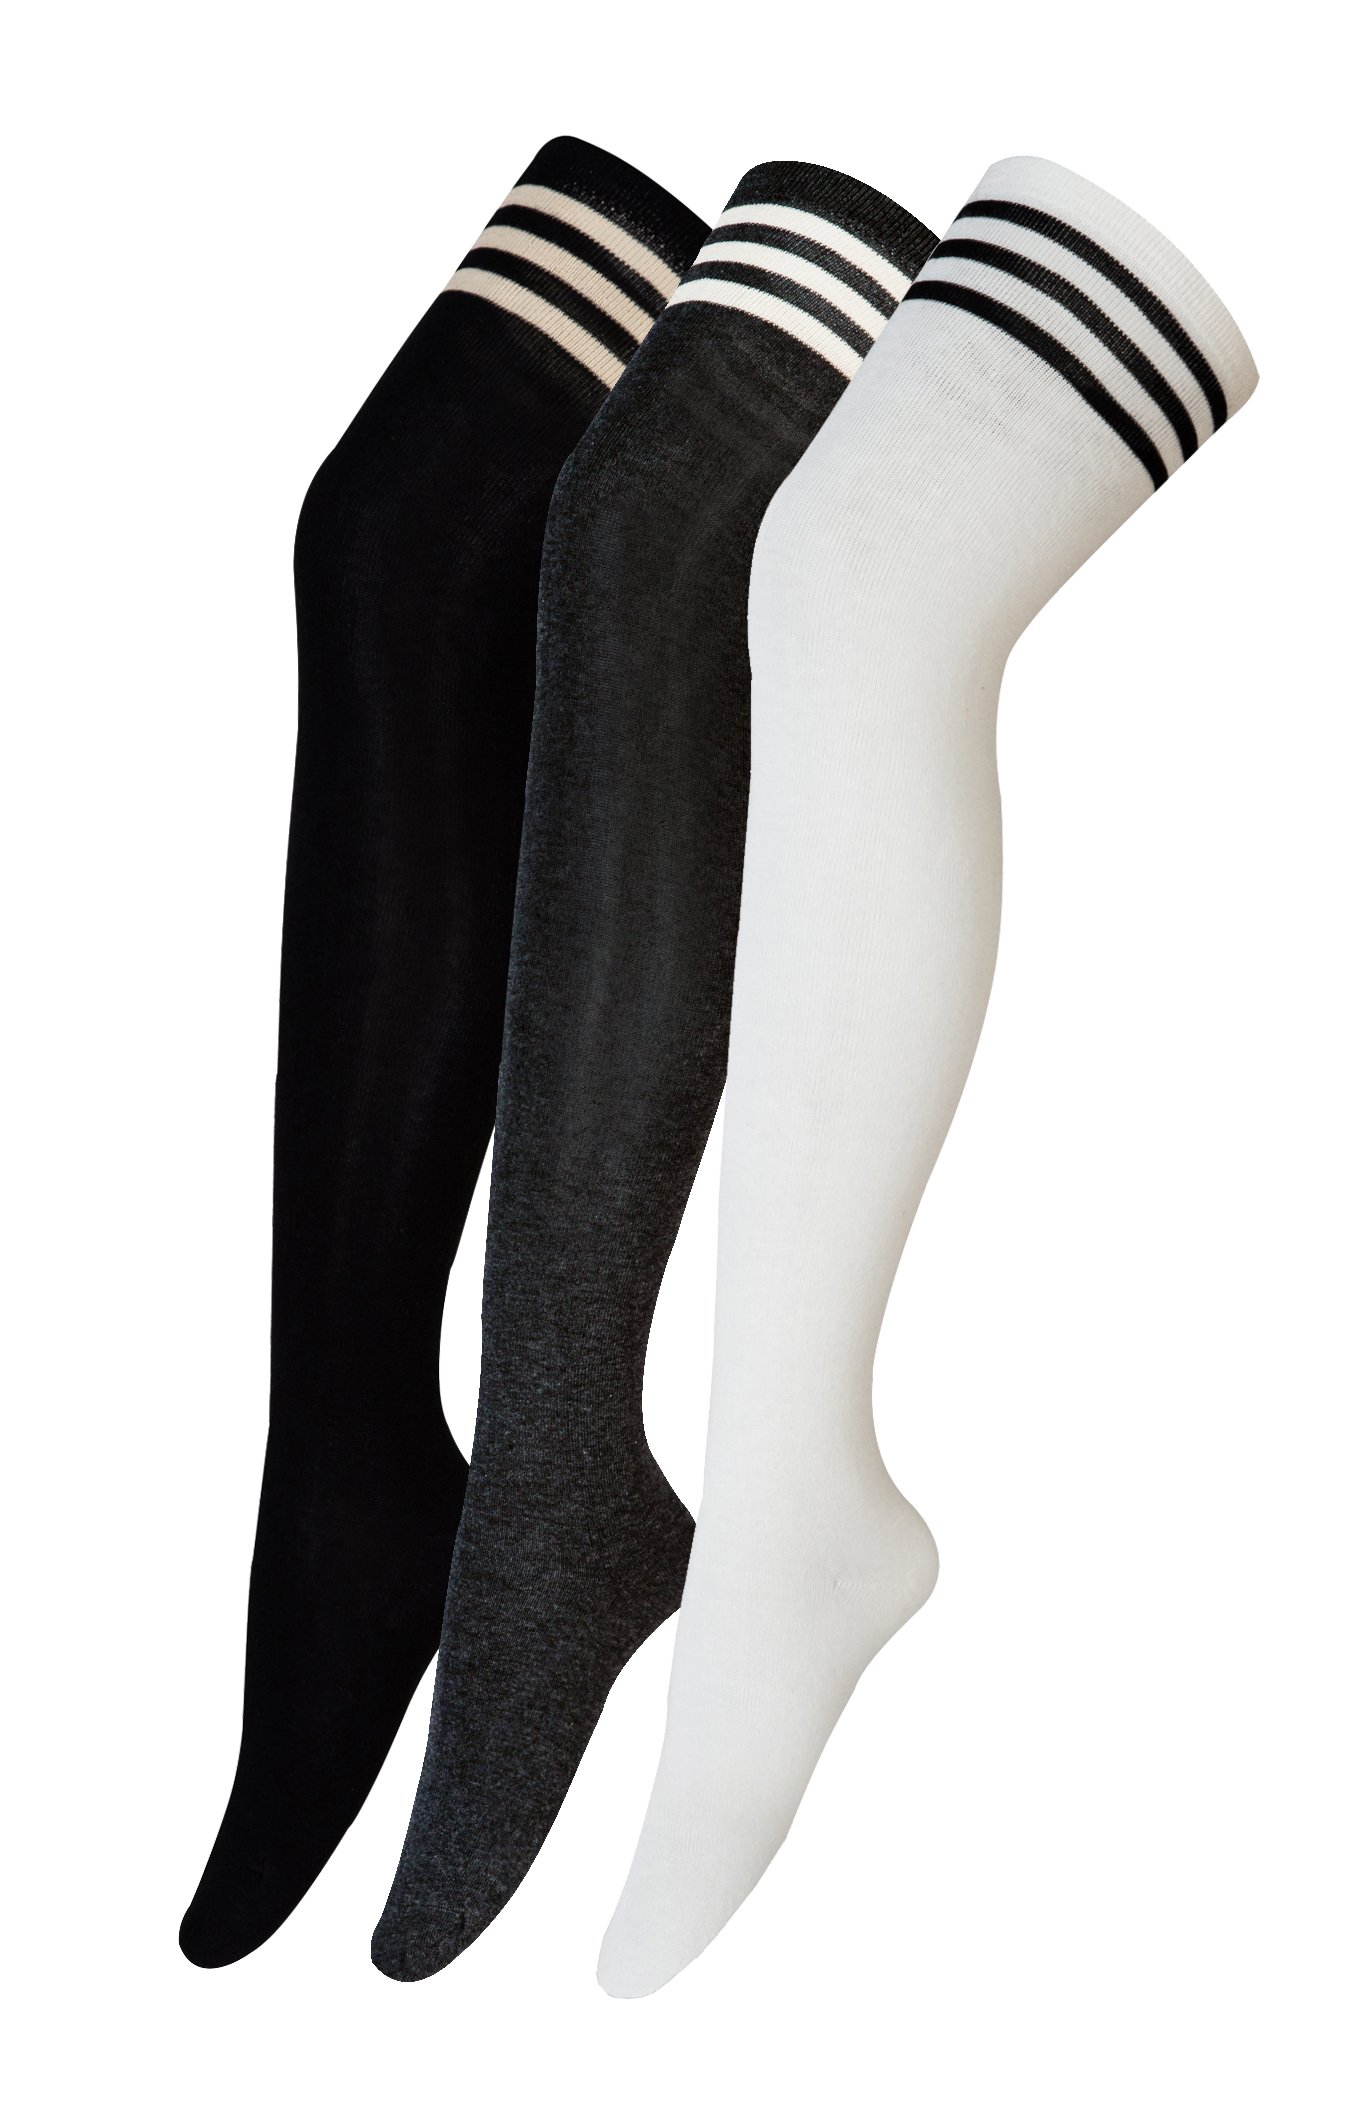 Urban Goco Women Triple Stripe Over The Knee High Socks 3 Pairs (Model A) RRP 4.99 CLEARANCE XL 3.99